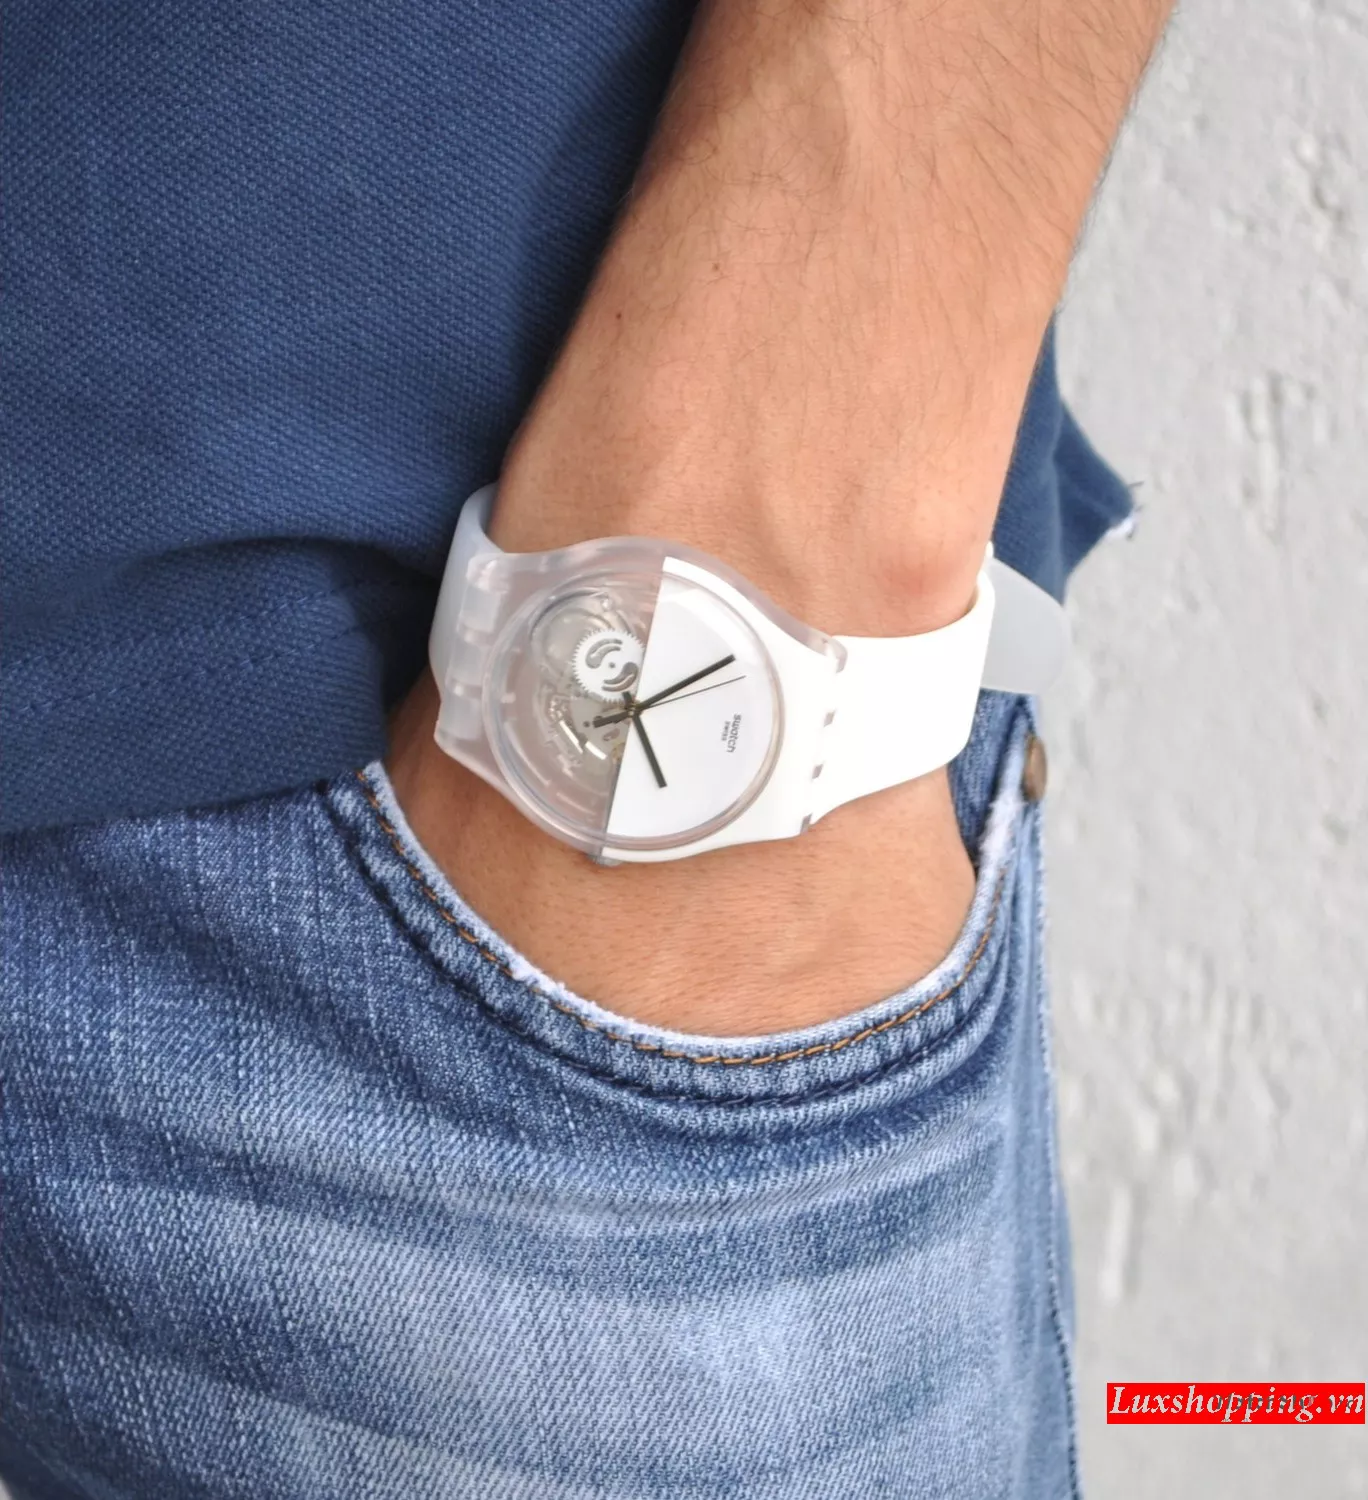 Swatch Unisex Swiss White Silicone Watch 41mm 